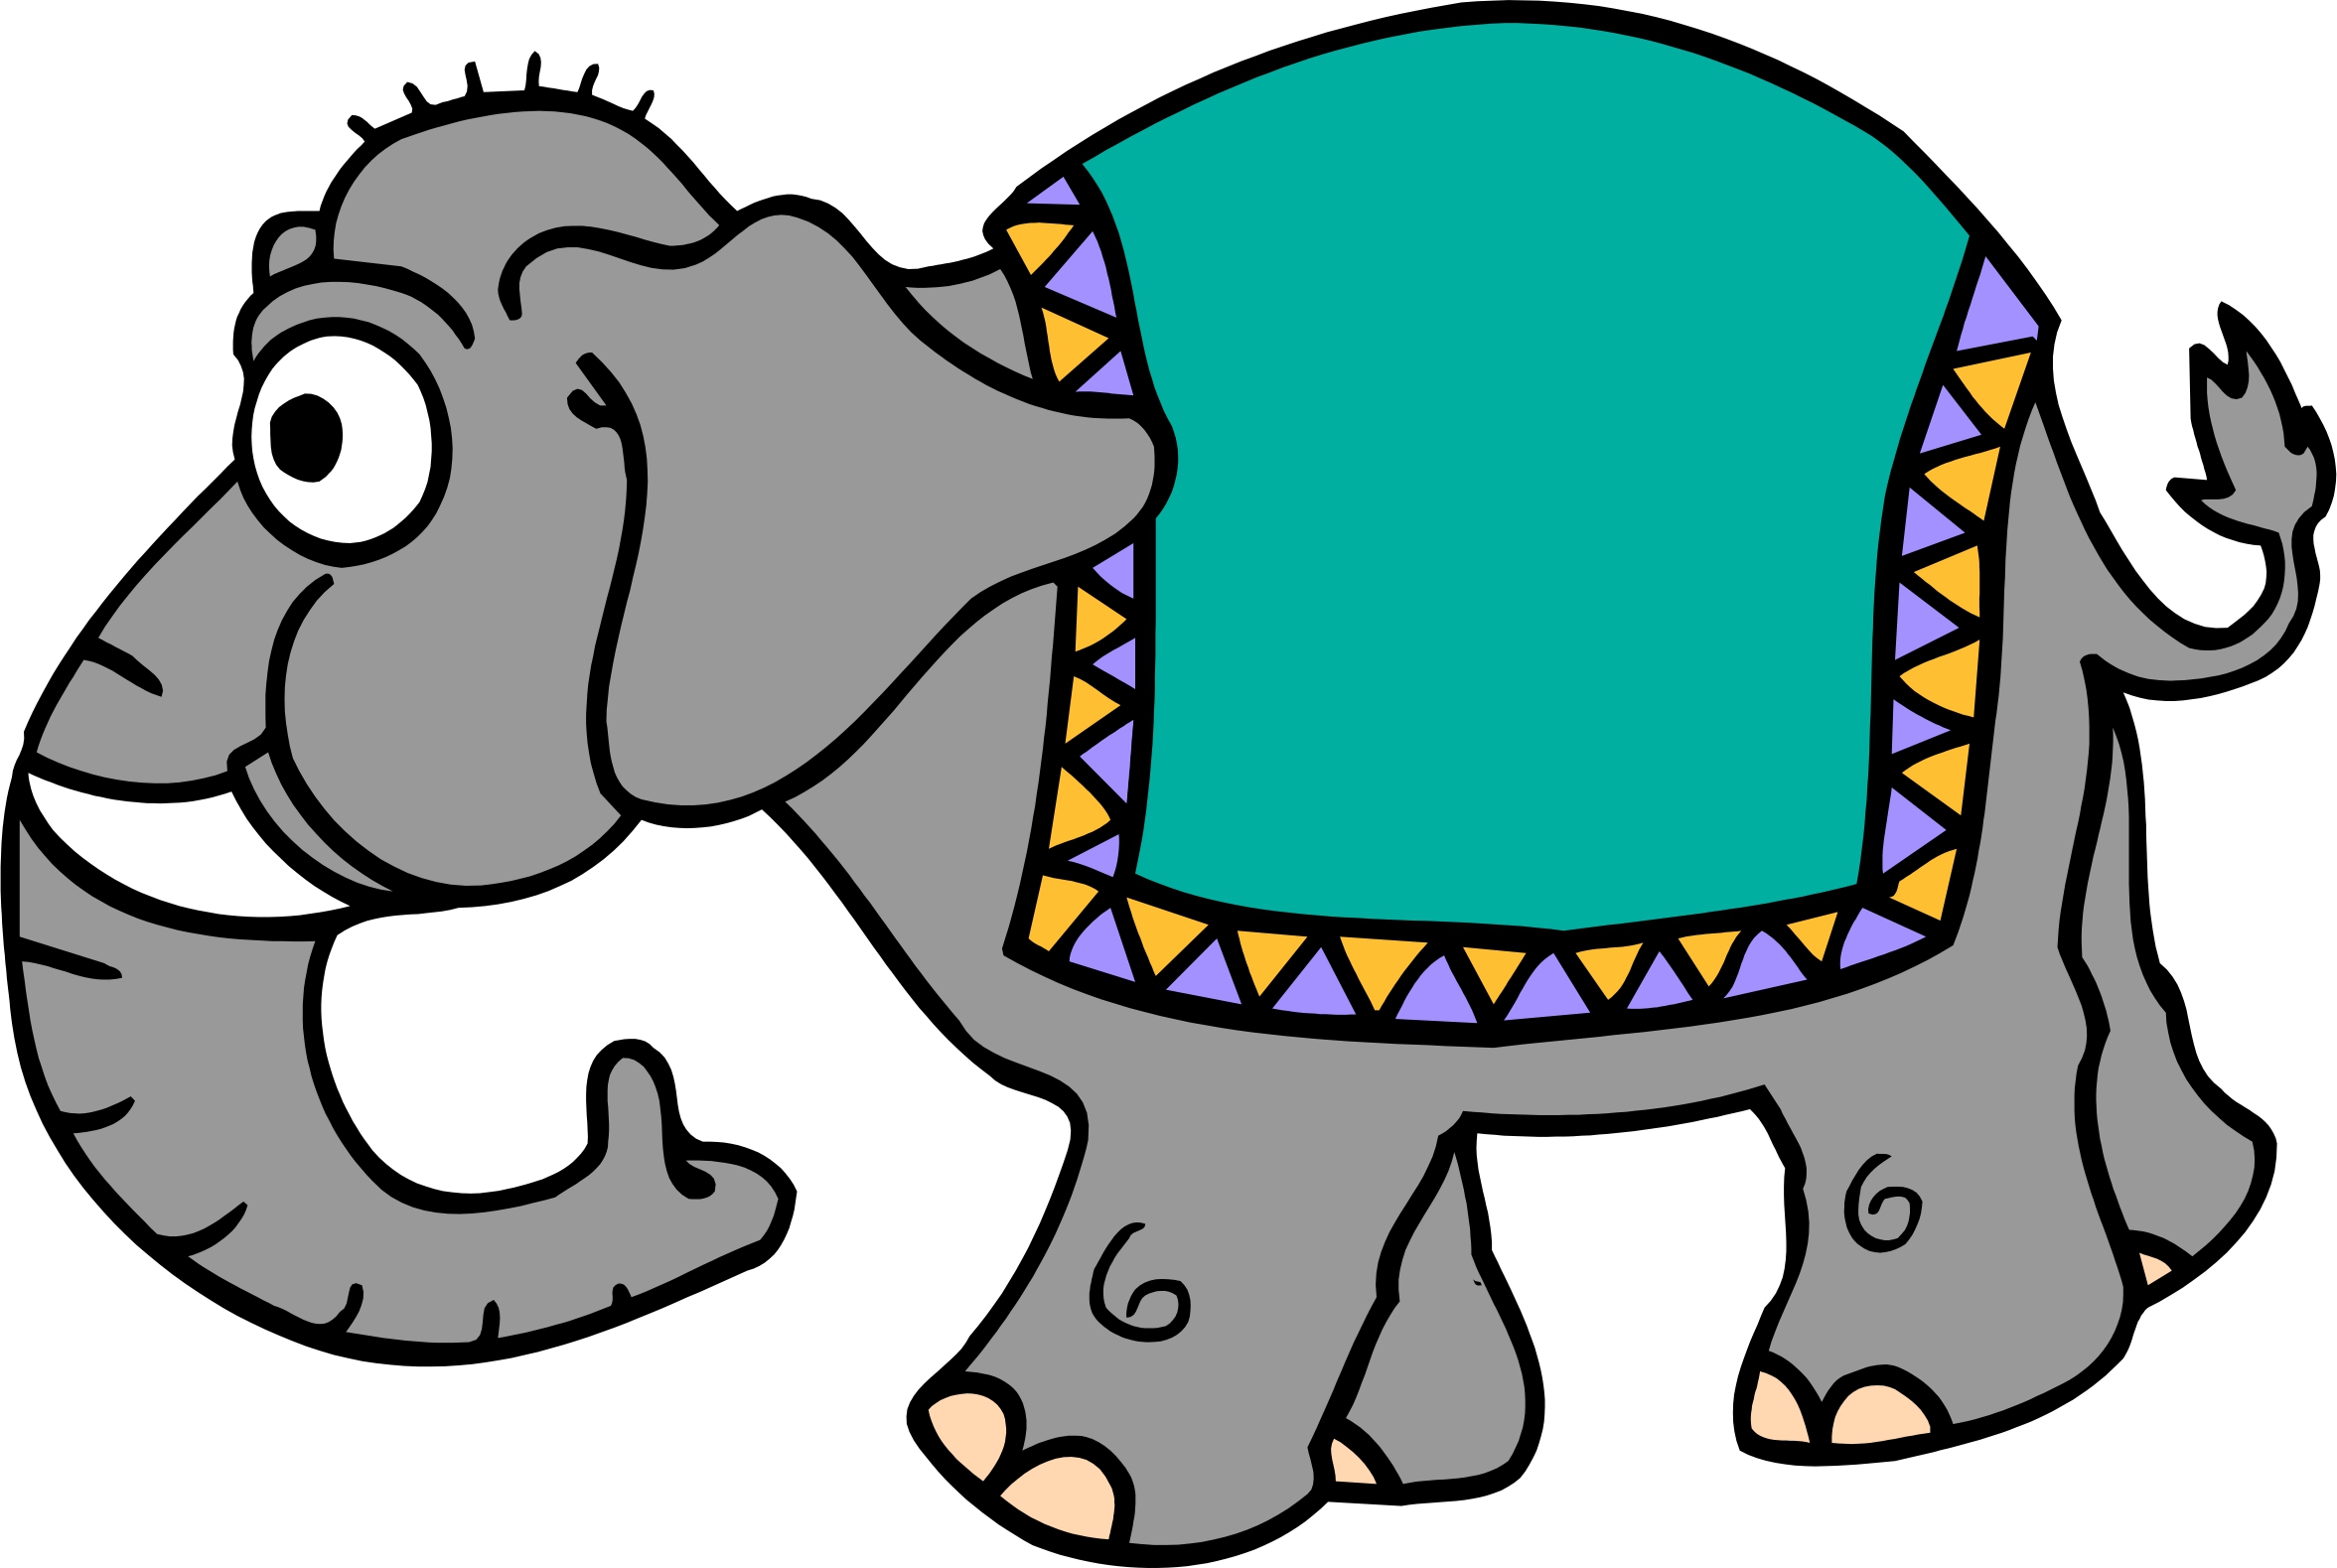 Elephants cartoon images dowload 3d hd picture design free ...